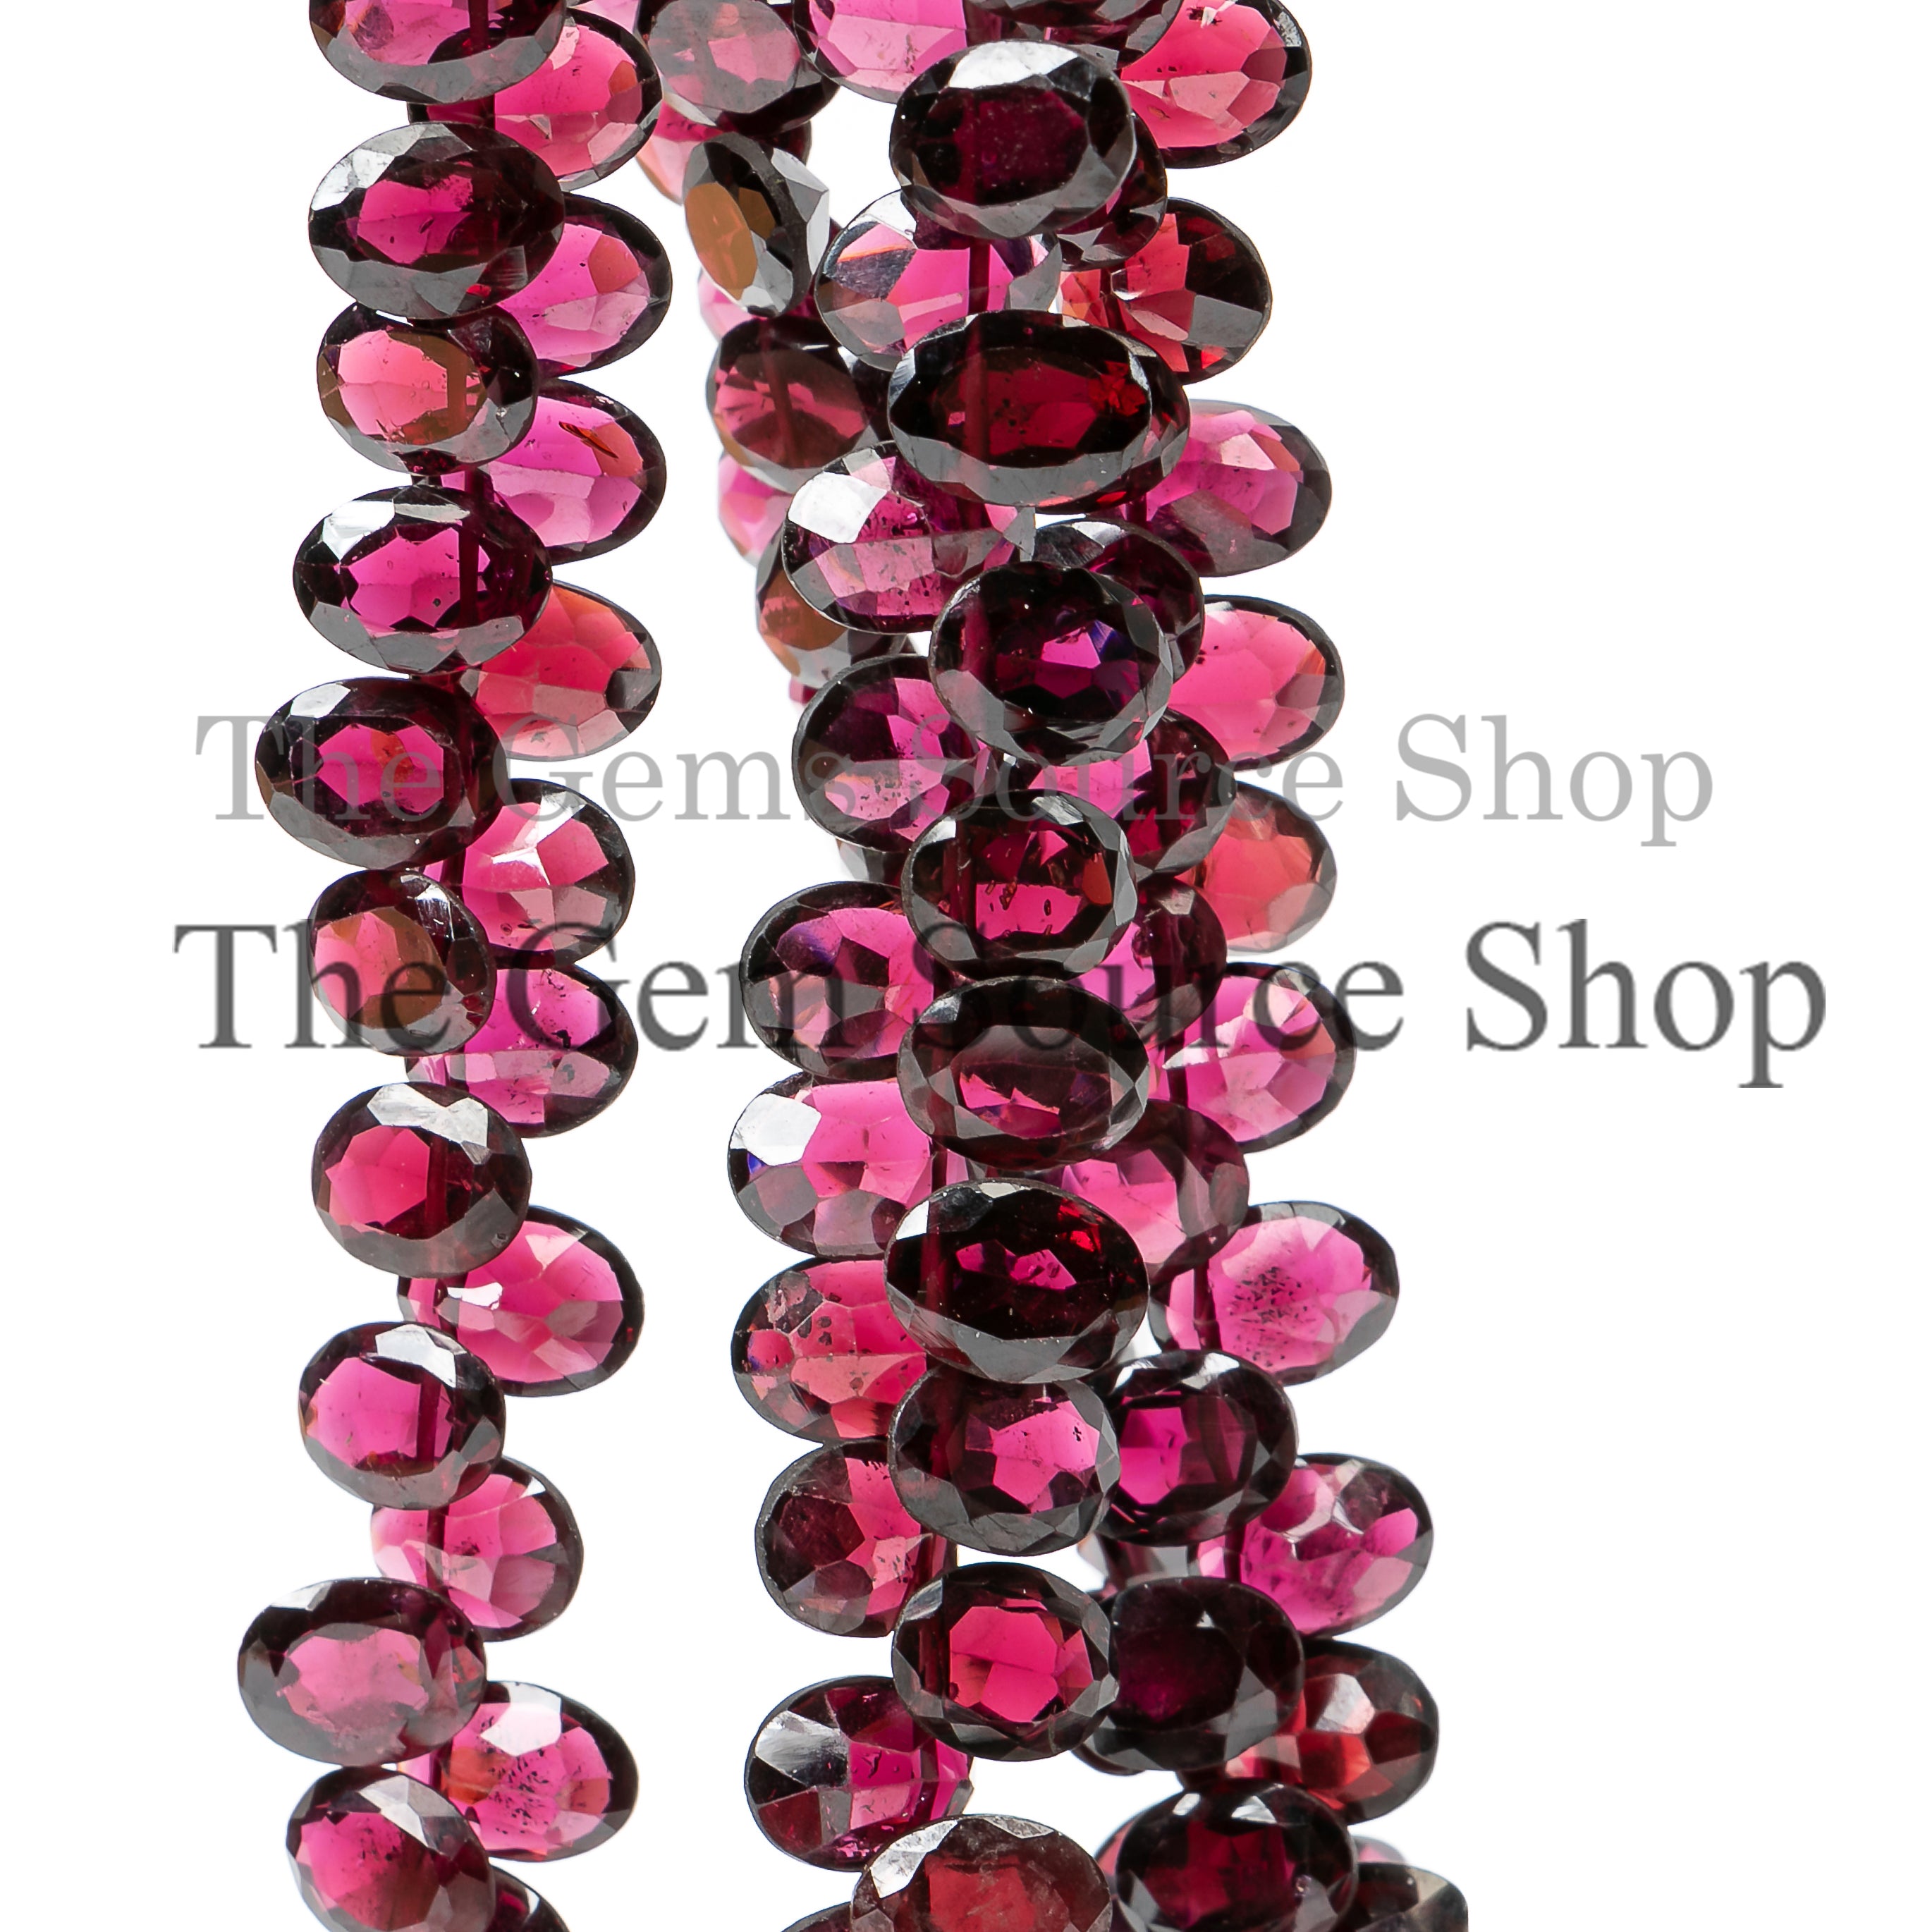 Rhodolite Garnet Faceted Oval Beads, Rhodolite Garnet Briollite Cut Oval Shape Beads, Rhodolite Garnet Beads, Rhodolite Garnet, Garnet Beads